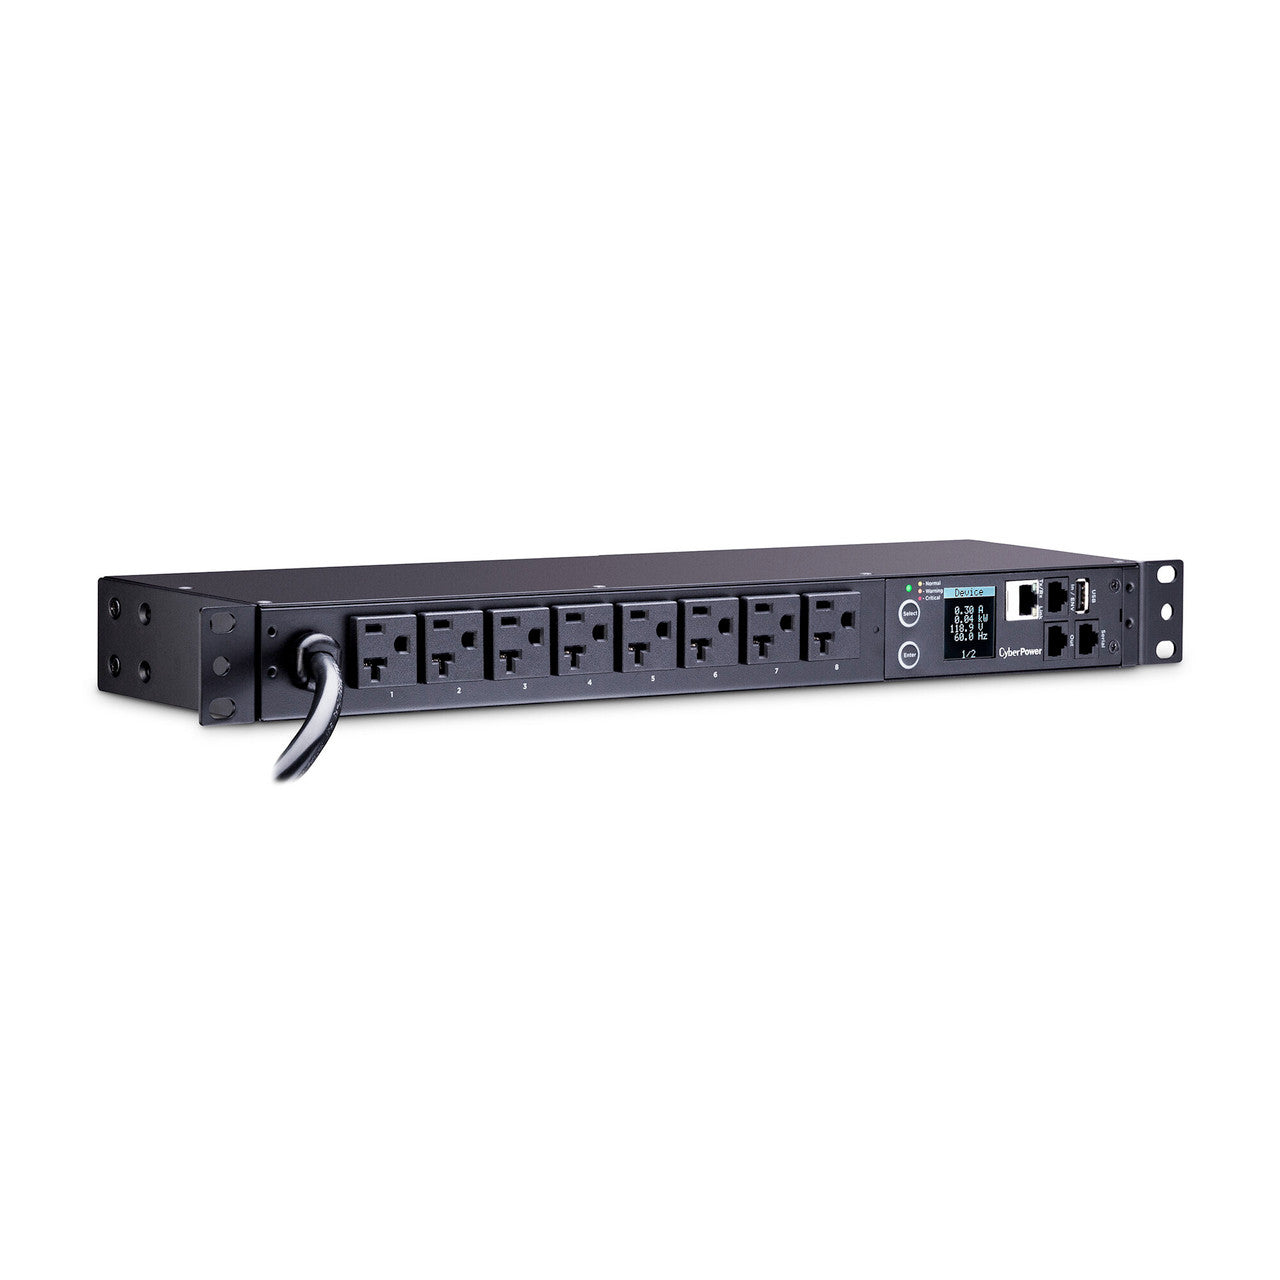 CyberPower PDU31002 Monitored PDU 20A 120V (8) 5-20R Outlets NEMA (L)5-20P 12ft Cord SNMP 1U 3YR WTY